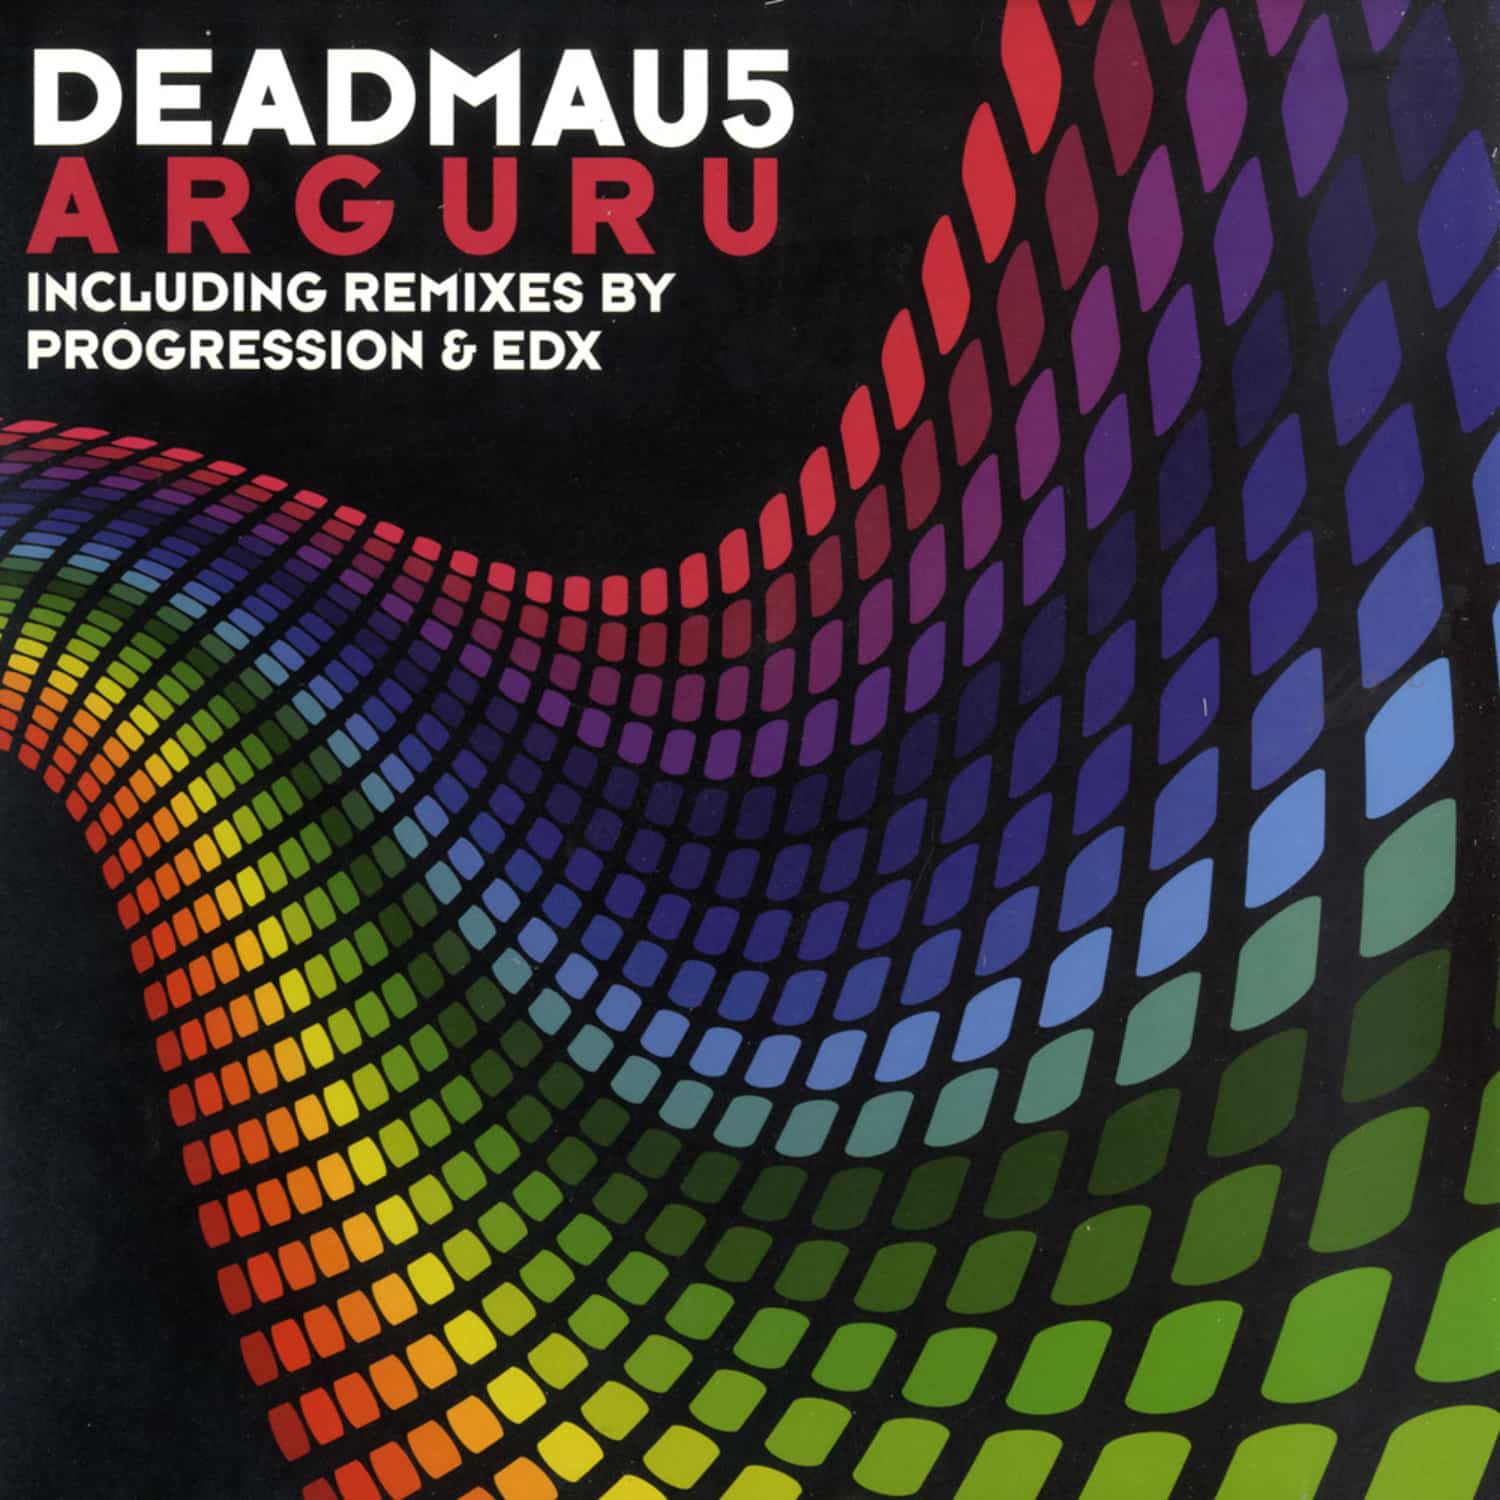 Deadmau5 - ARGURU - PROGRESSION & EDX REMIX